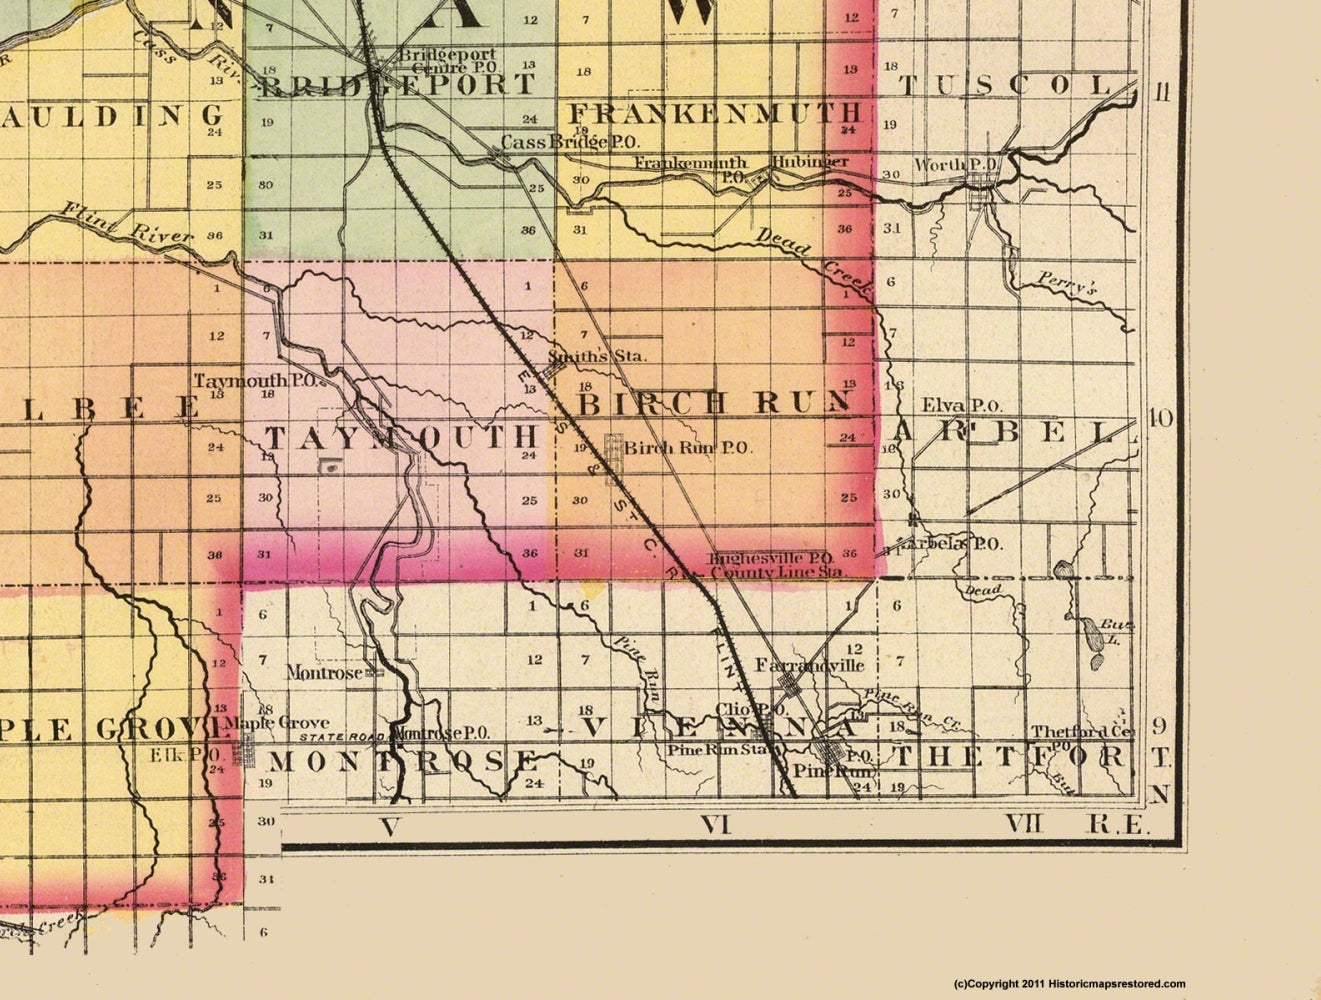 Historic County Map - Saginaw County Michigan - Walling 1873 - 30.38 x 23 - Vintage Wall Art